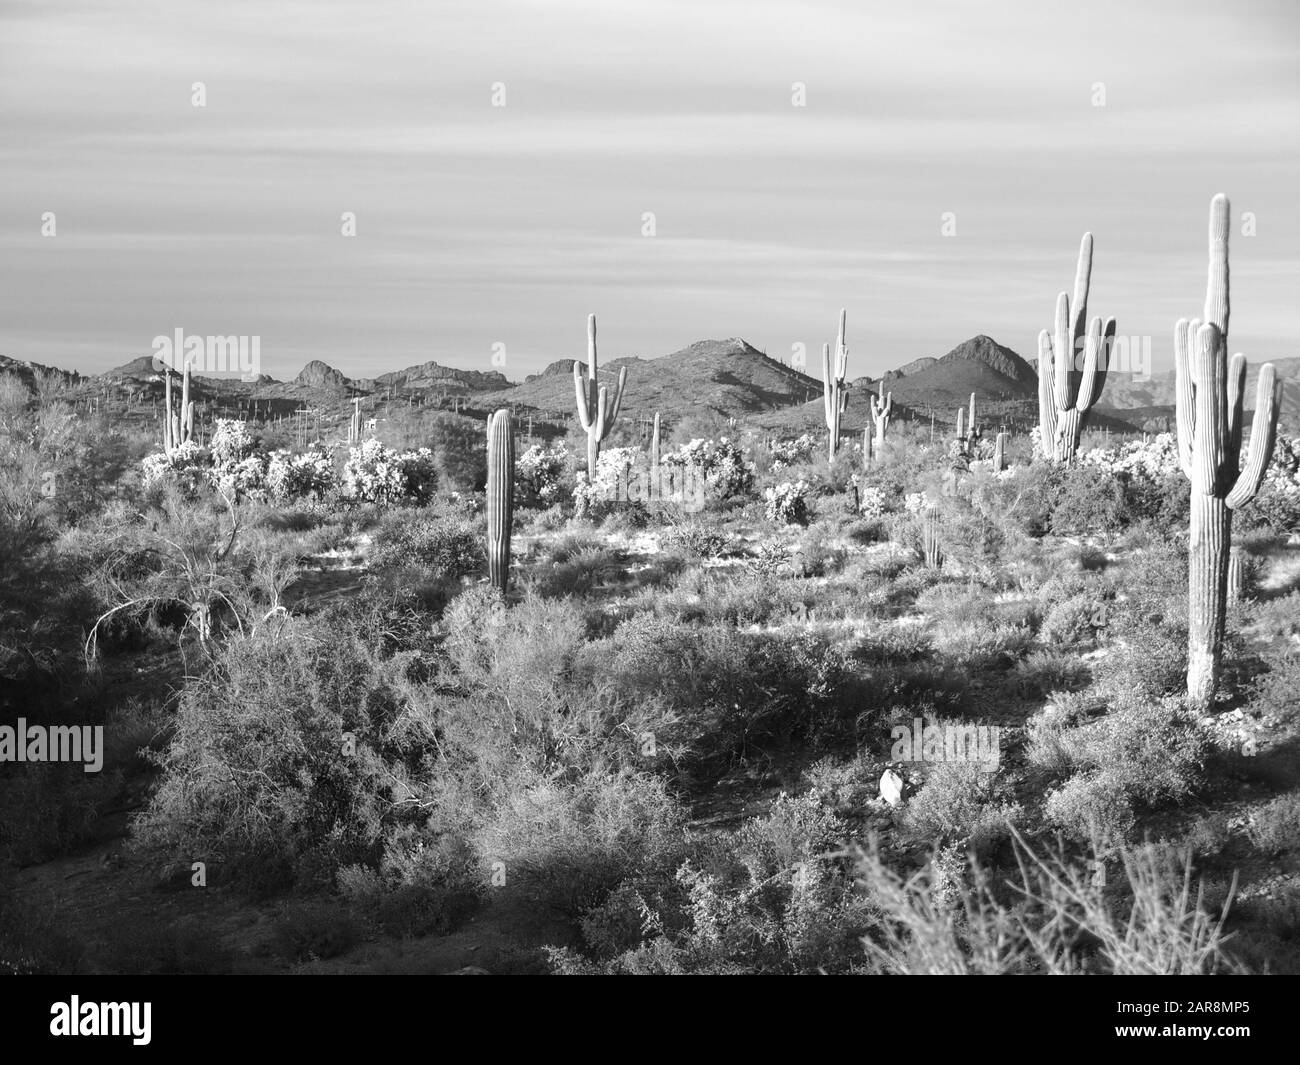 Saguaro cactus sunset sonoran desert Black and White Stock Photos ...